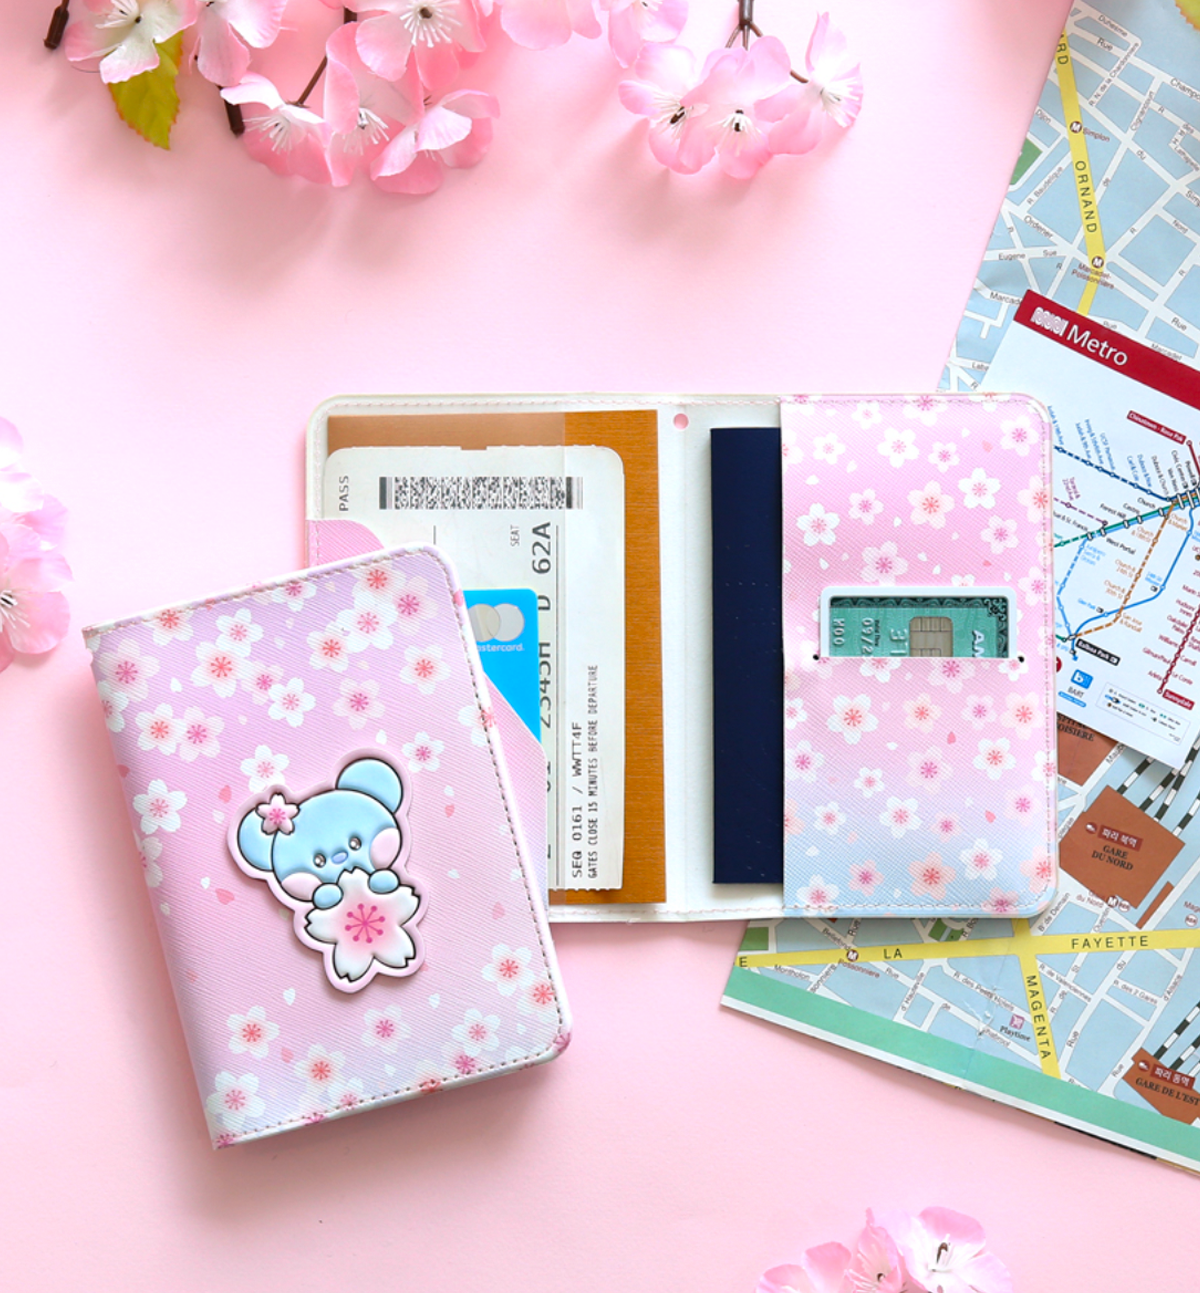 BT21 Cherry Blossom Passport Cover [Shooky]